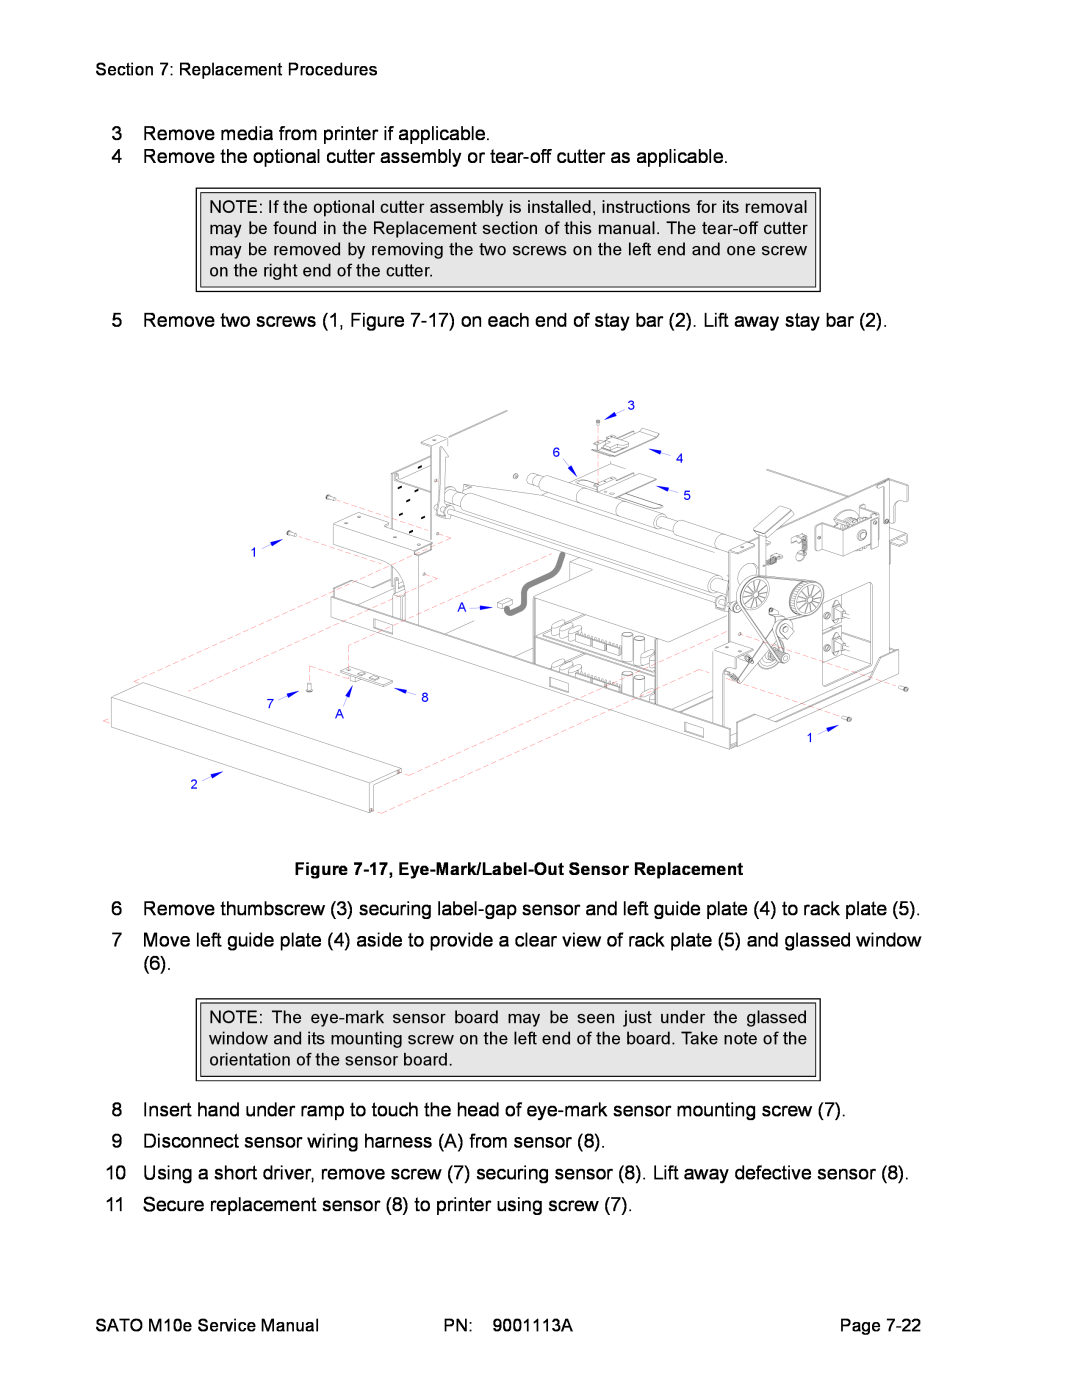 SATO 10e service manual 17, Eye-Mark/Label-Out Sensor Replacement 